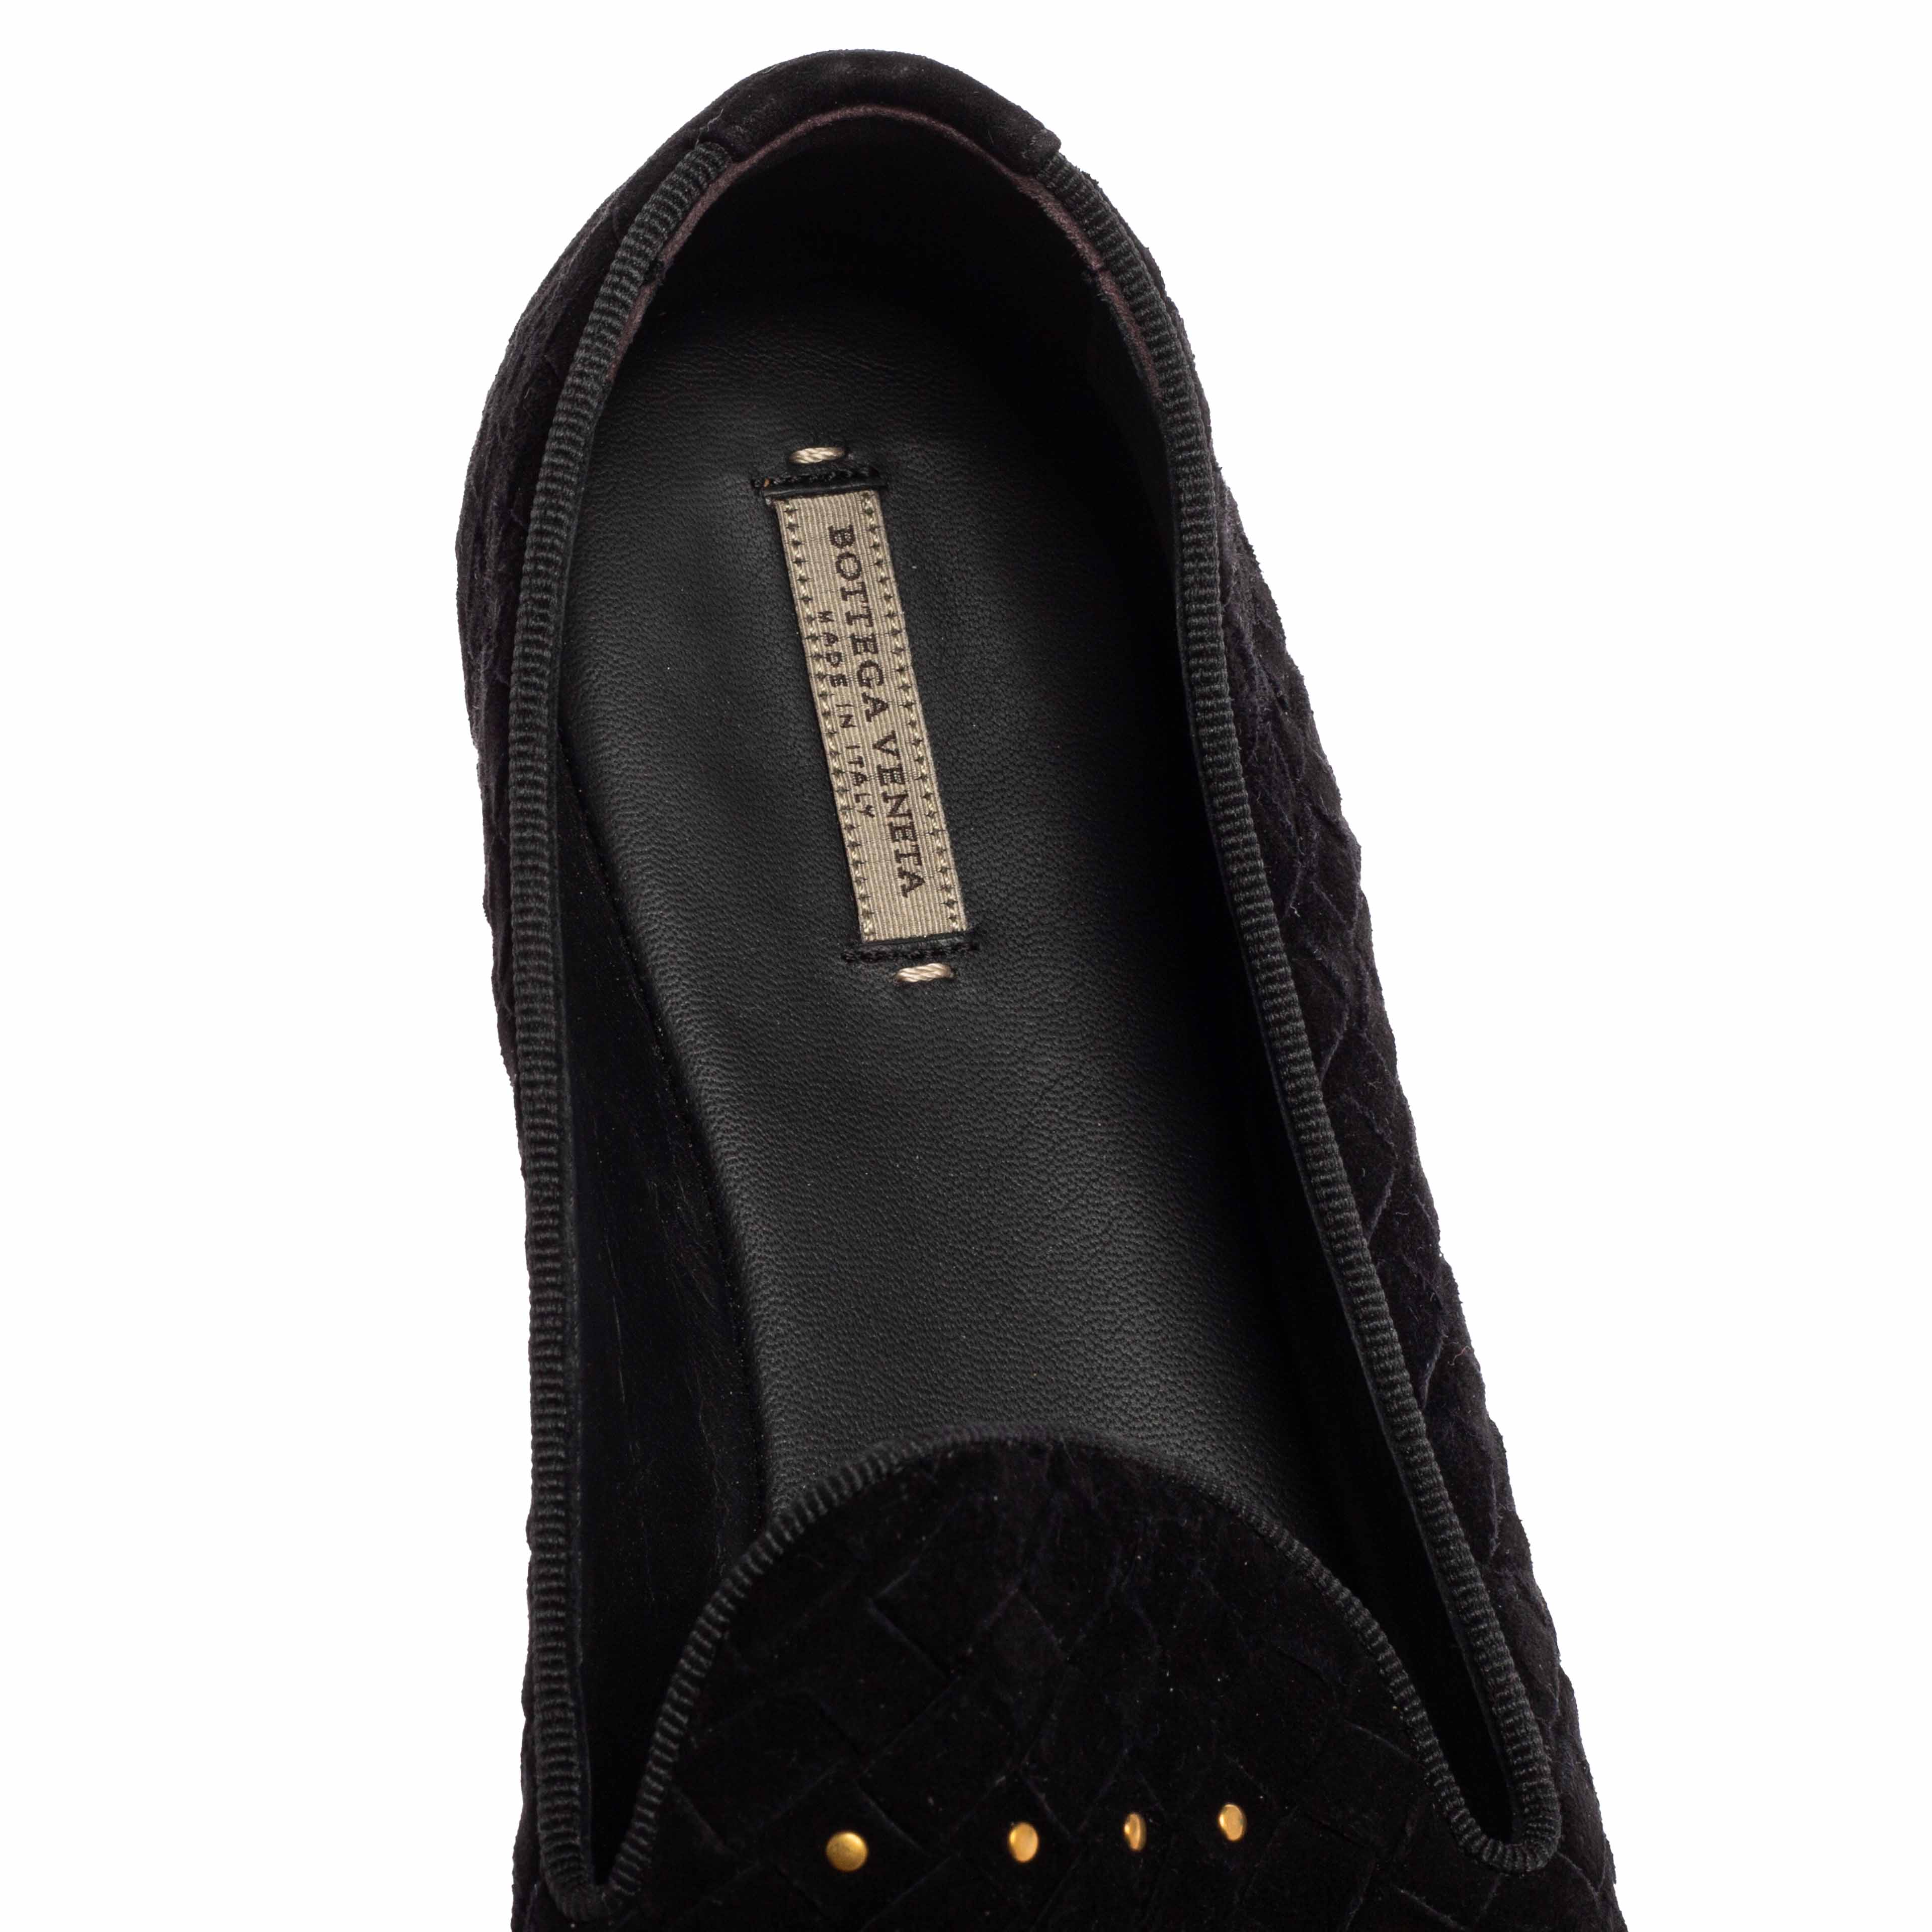 Bottega Veneta Black Interecciato Suede Studded Smoking Slippers Size 36